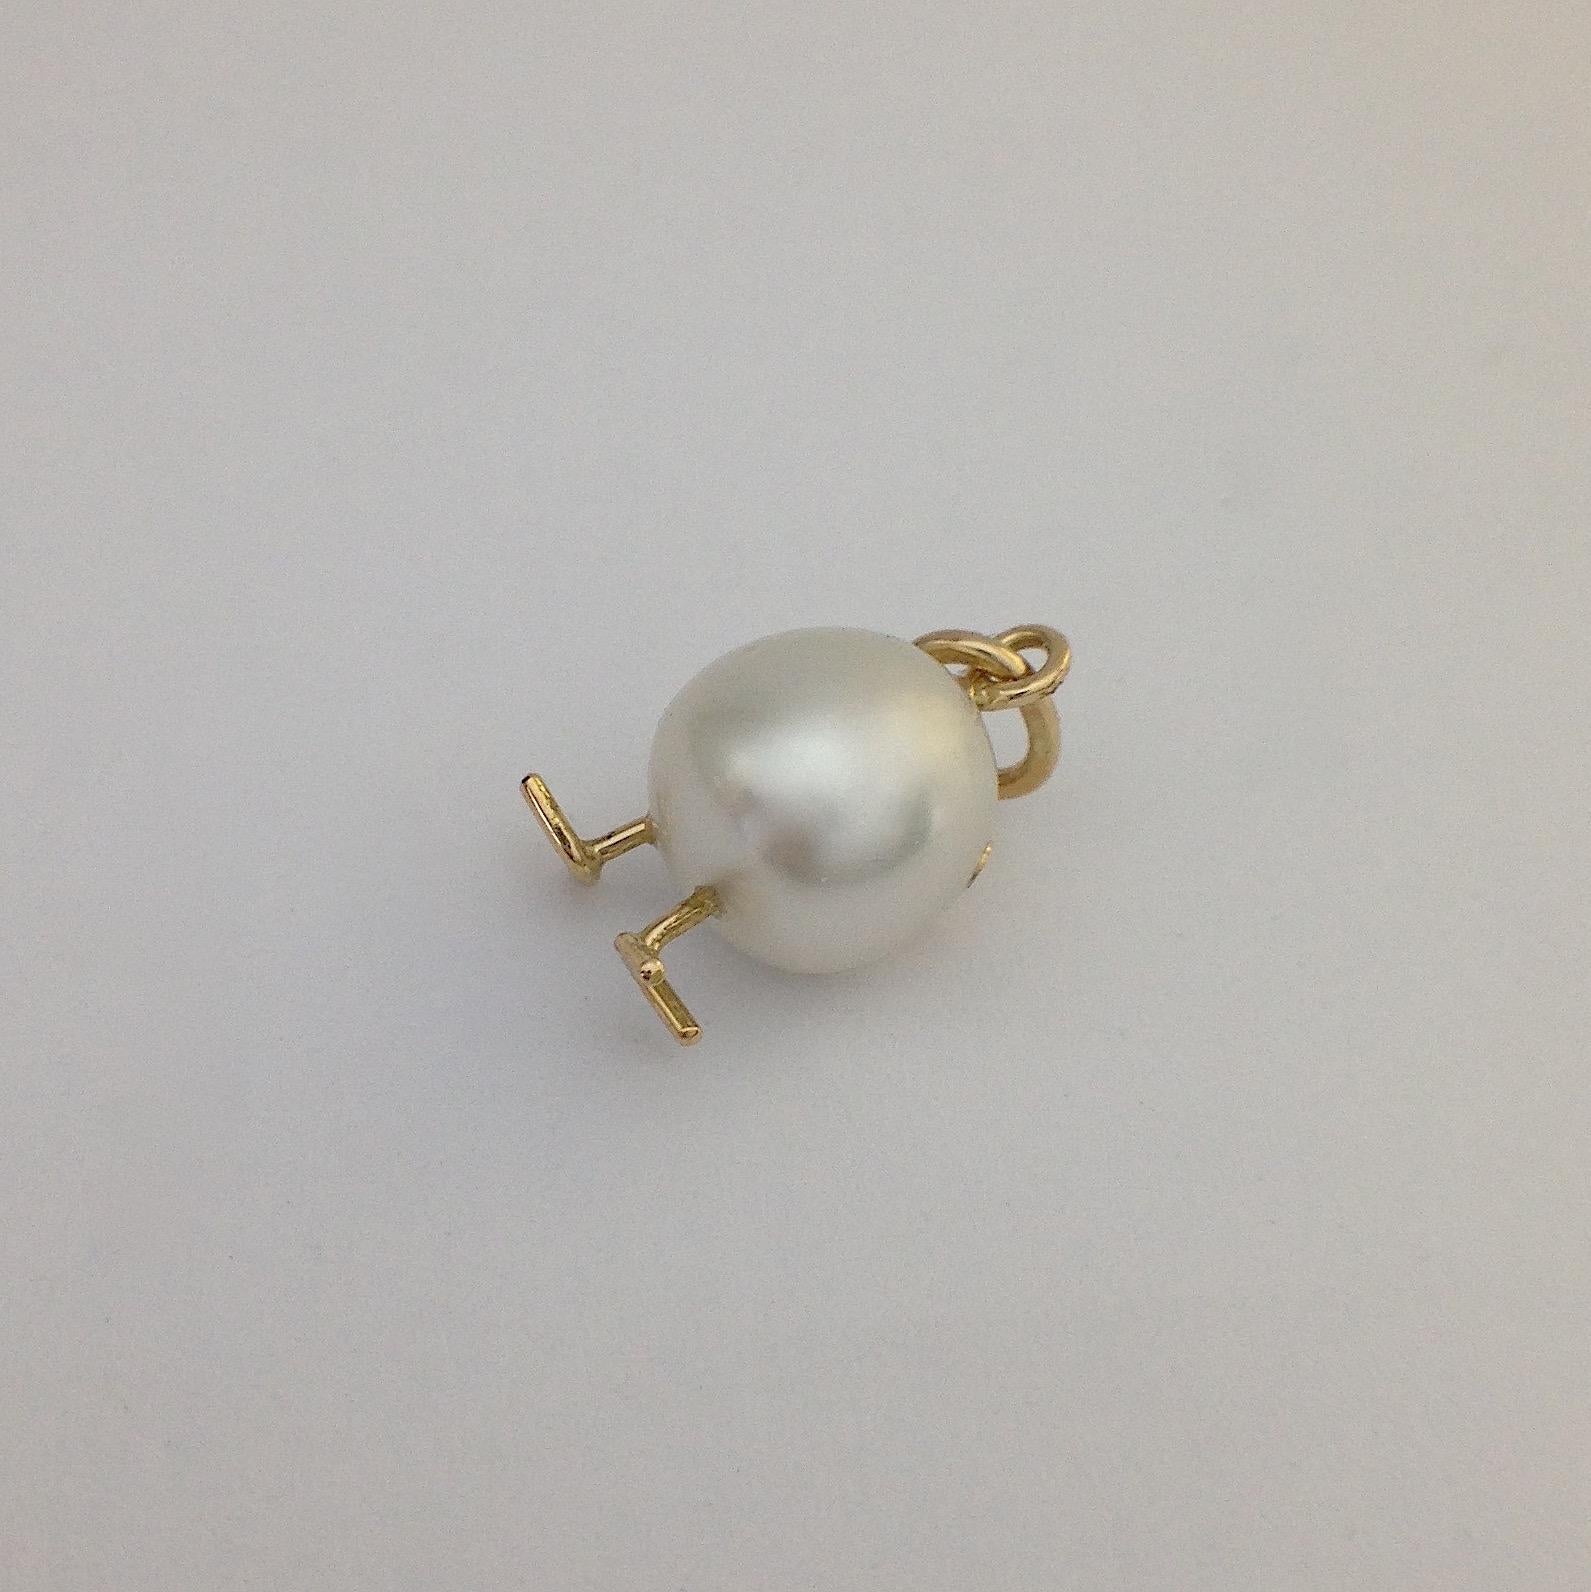 Petronilla Chick Australian Pearl White Diamond 18 Kt Gold Pendant Necklace 3